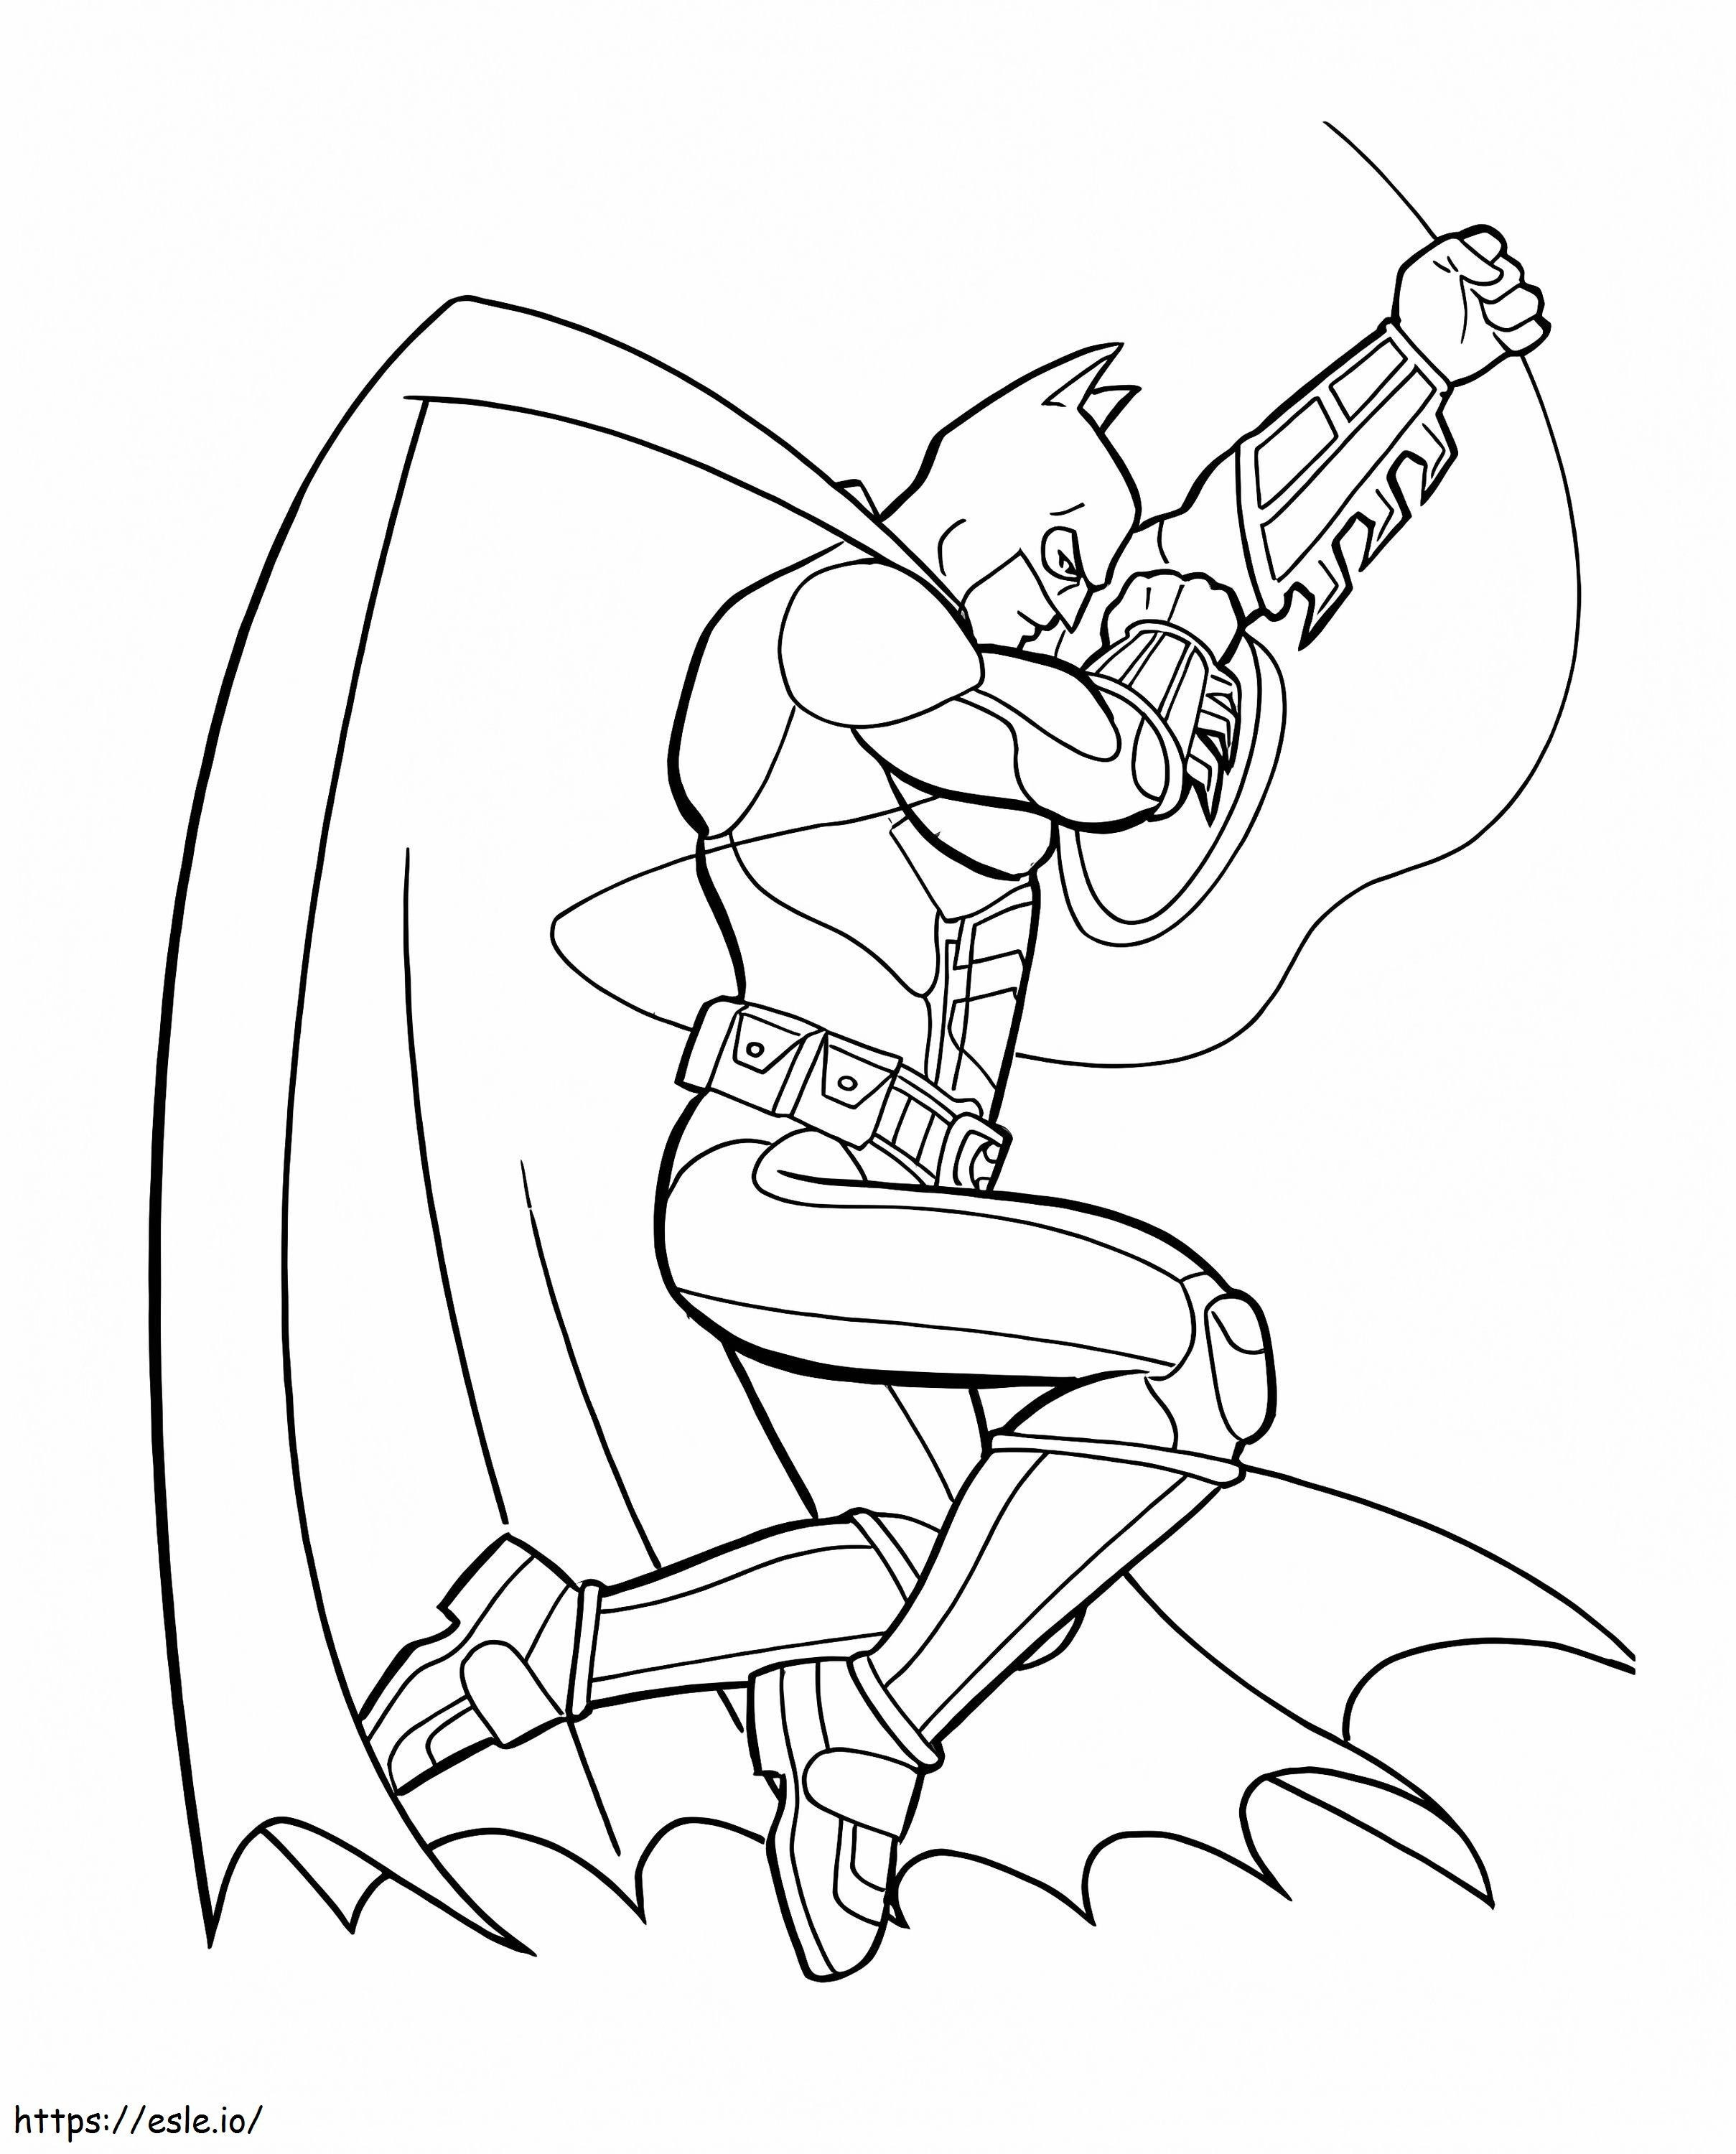 Batman Fight coloring page